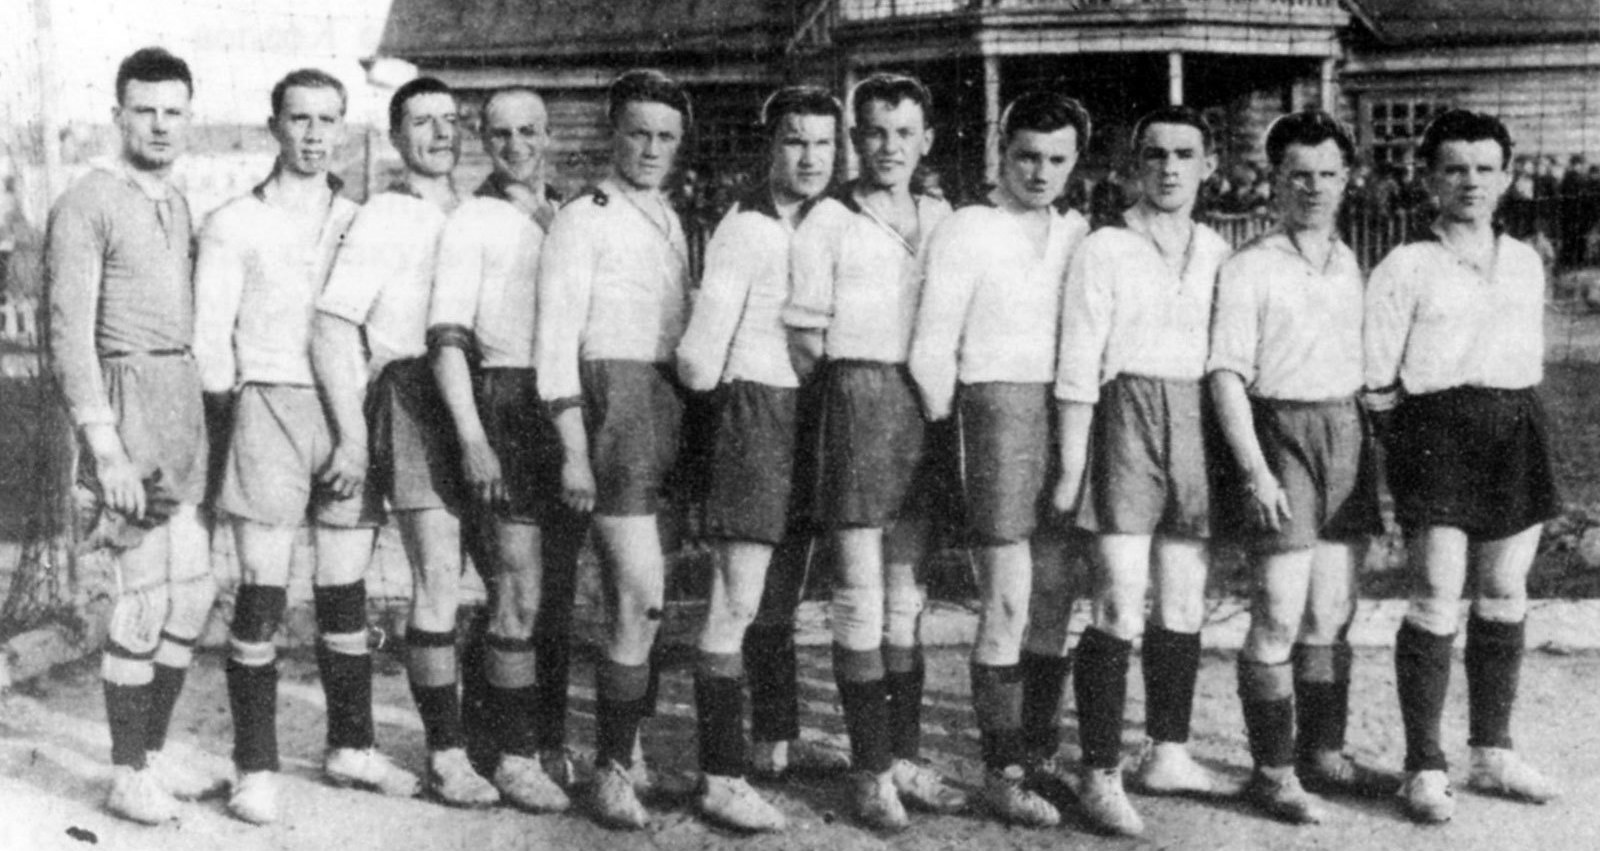 Dynamo-1926: Chulkov F., Lebedev P., Sokolov M., Karpenko N., Makarov A., Blinkov K., Ivanov S., Filippov I., Maslov D., Lenchikov I., Gruzinskiy D. 